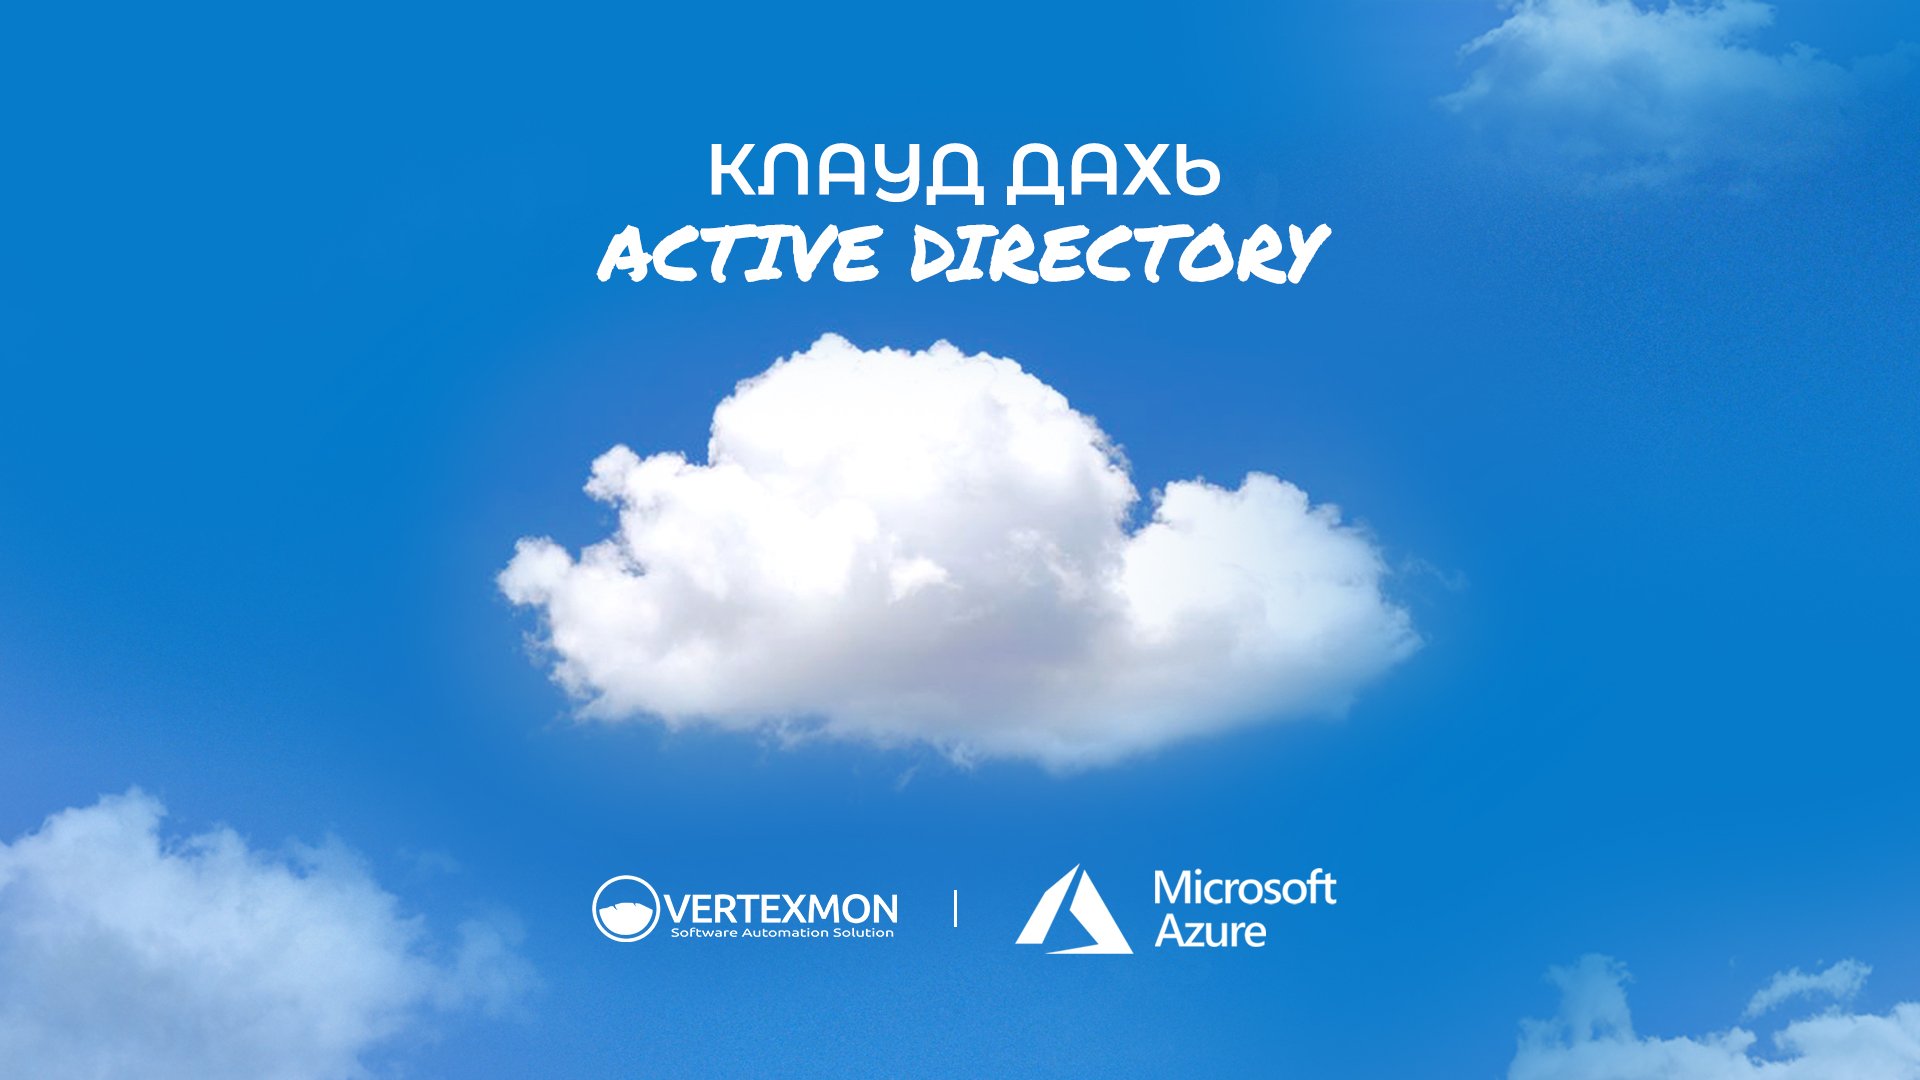 Microsoft Azure Active Directory